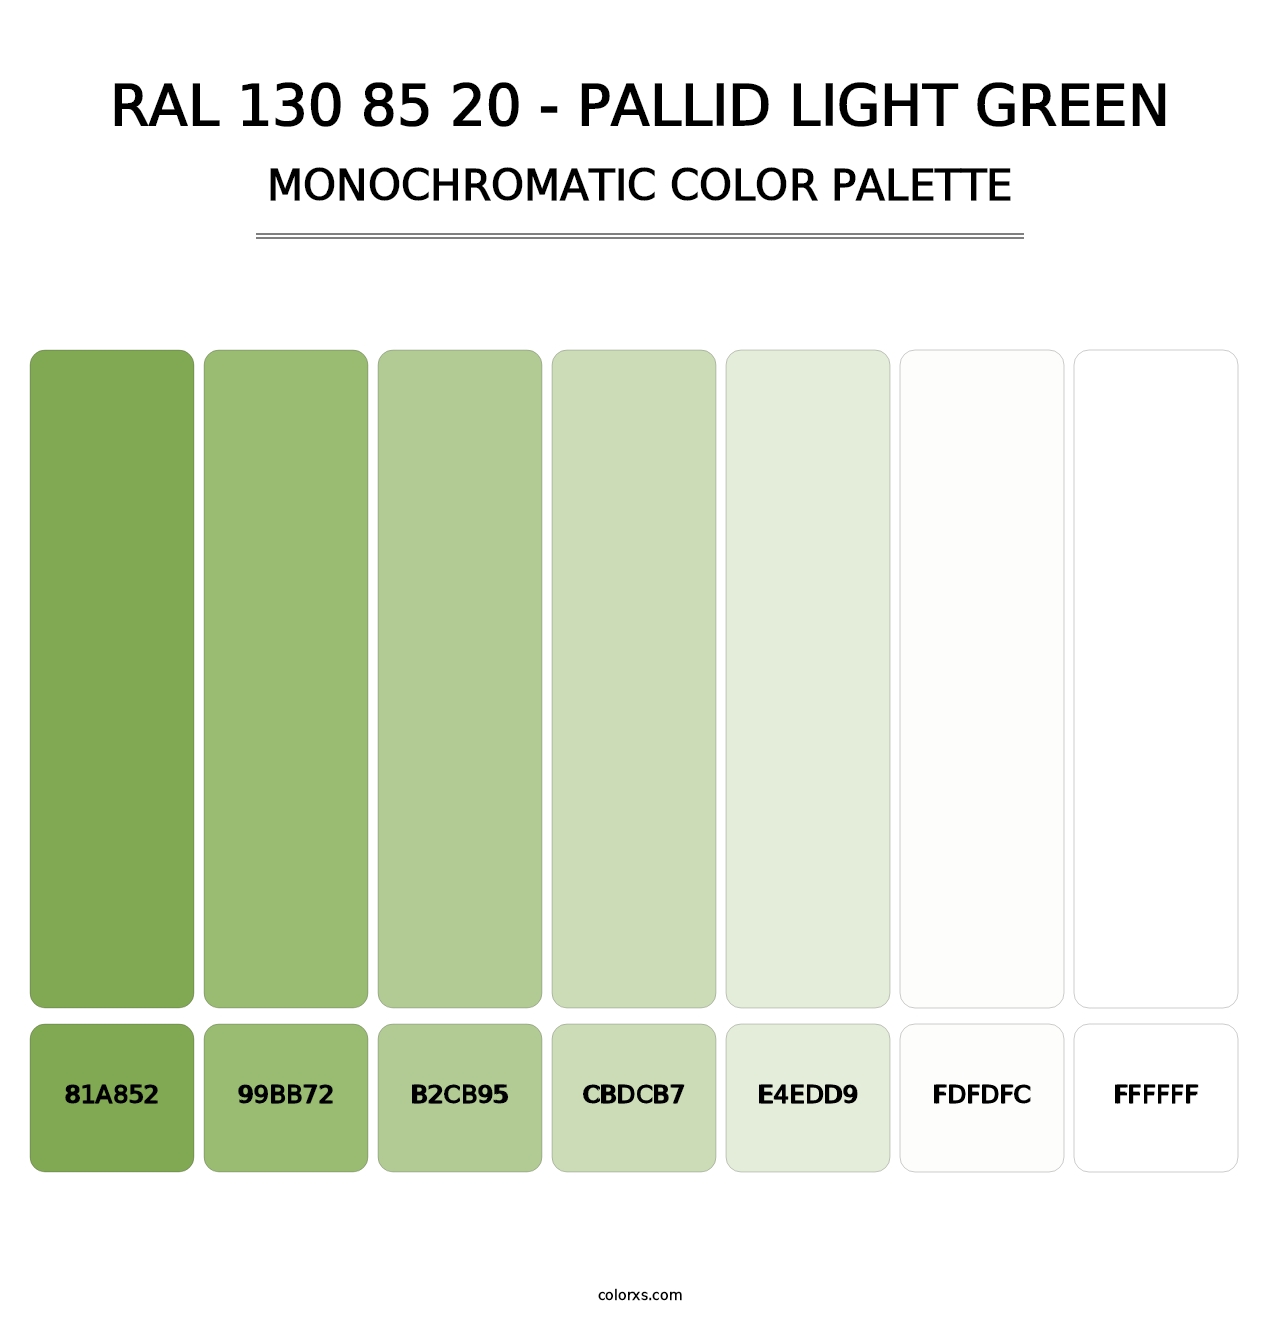 RAL 130 85 20 - Pallid Light Green - Monochromatic Color Palette